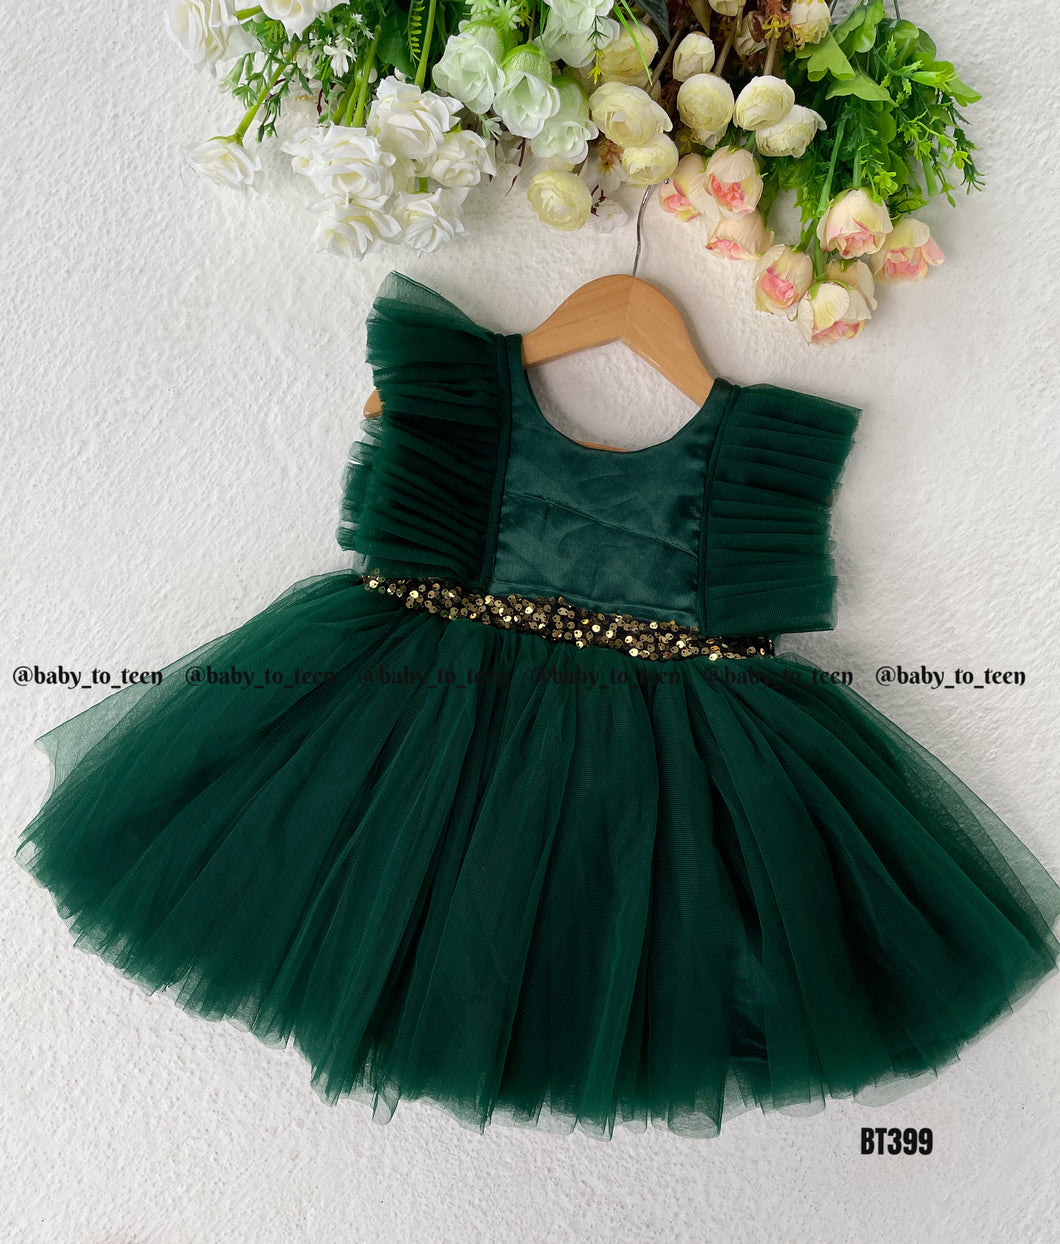 BT399 Emerald Enchantment: Festive Green Party Dress - Little Diva's Choice